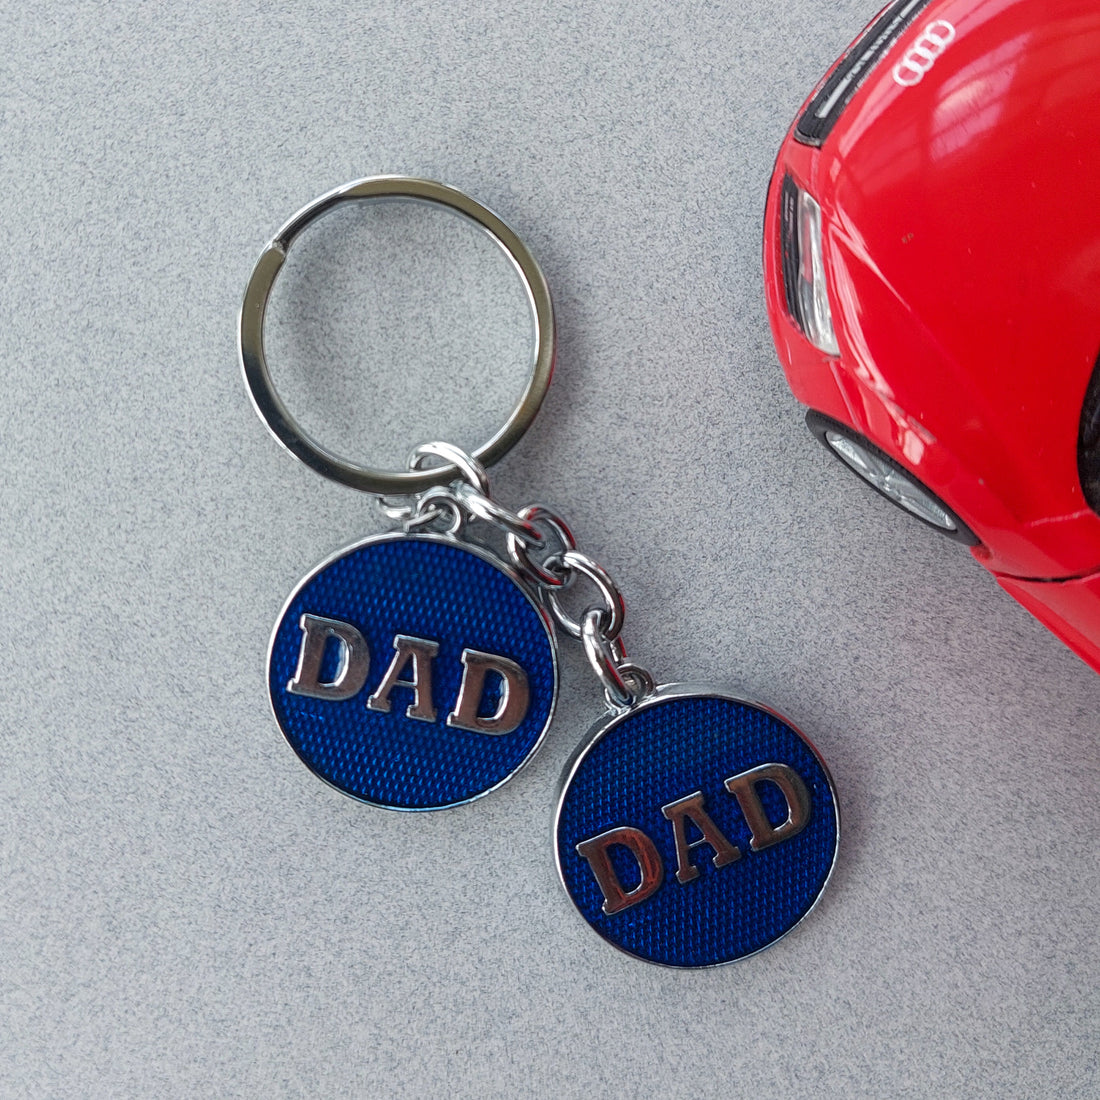 Dad Keychains